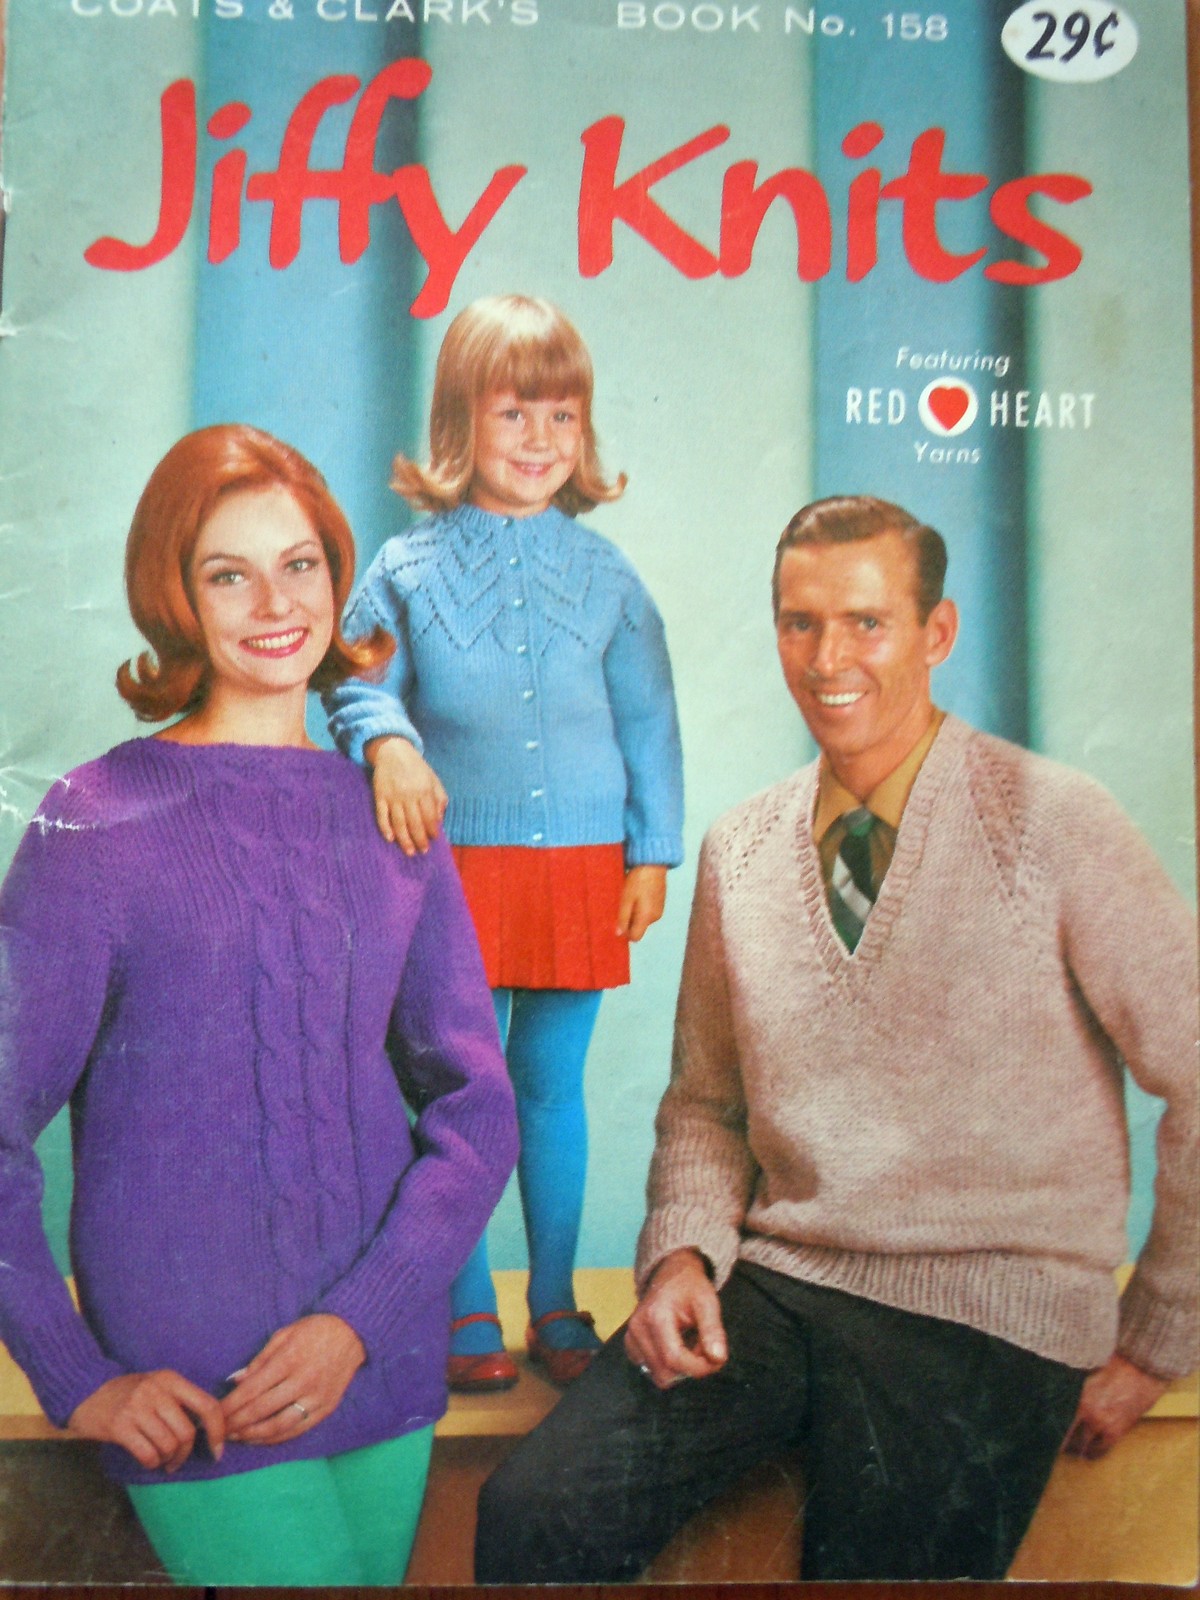 Vintage Jiffy Knits Coats & Clark Book No 158 1965 - $3.99